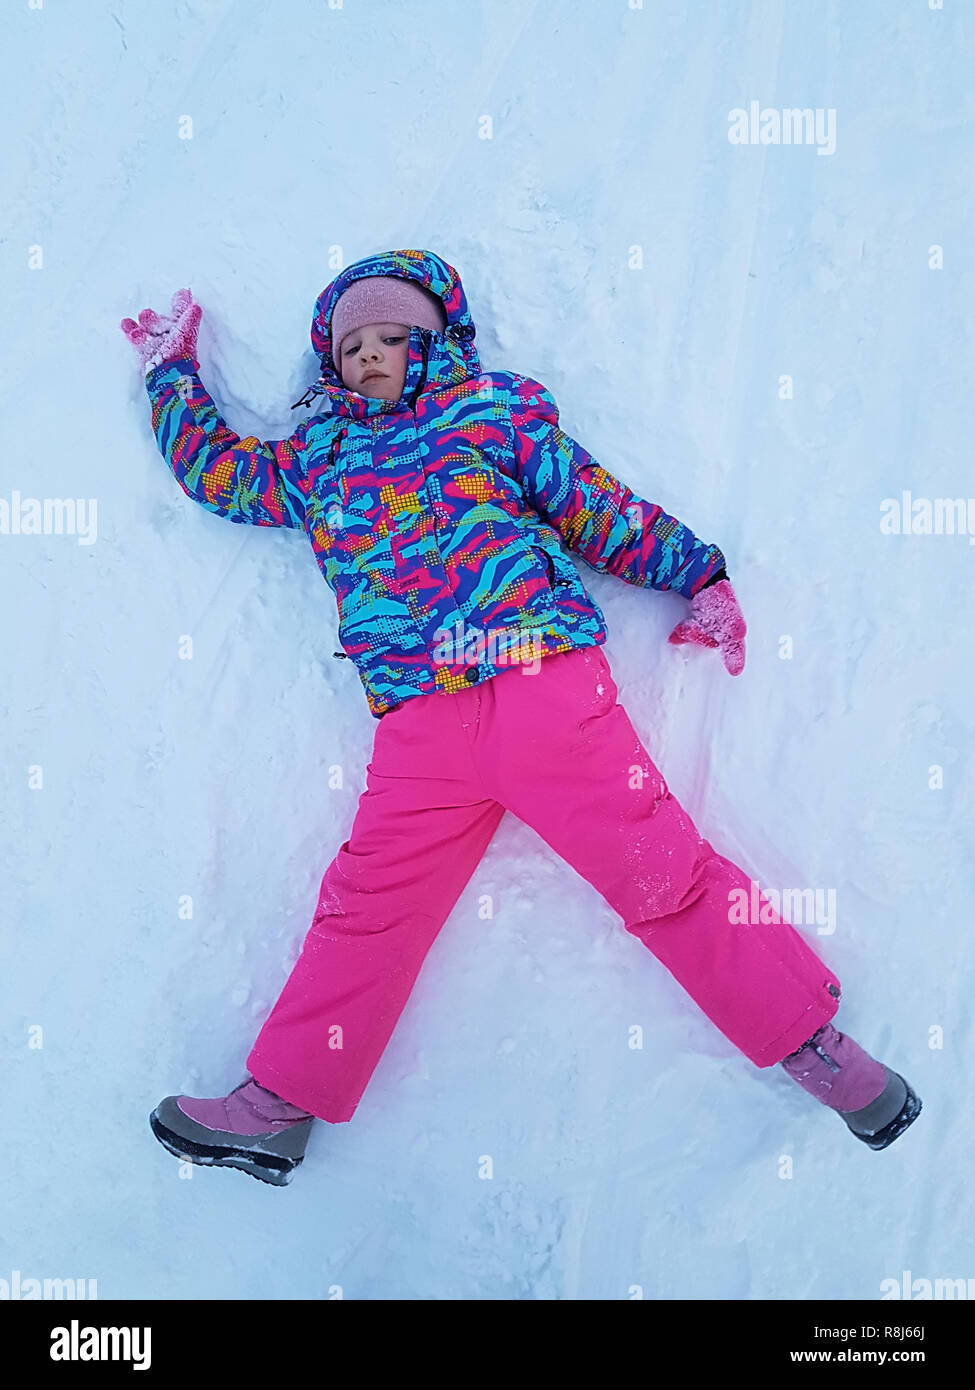 Cute little girl on skis Stock Photo - Alamy